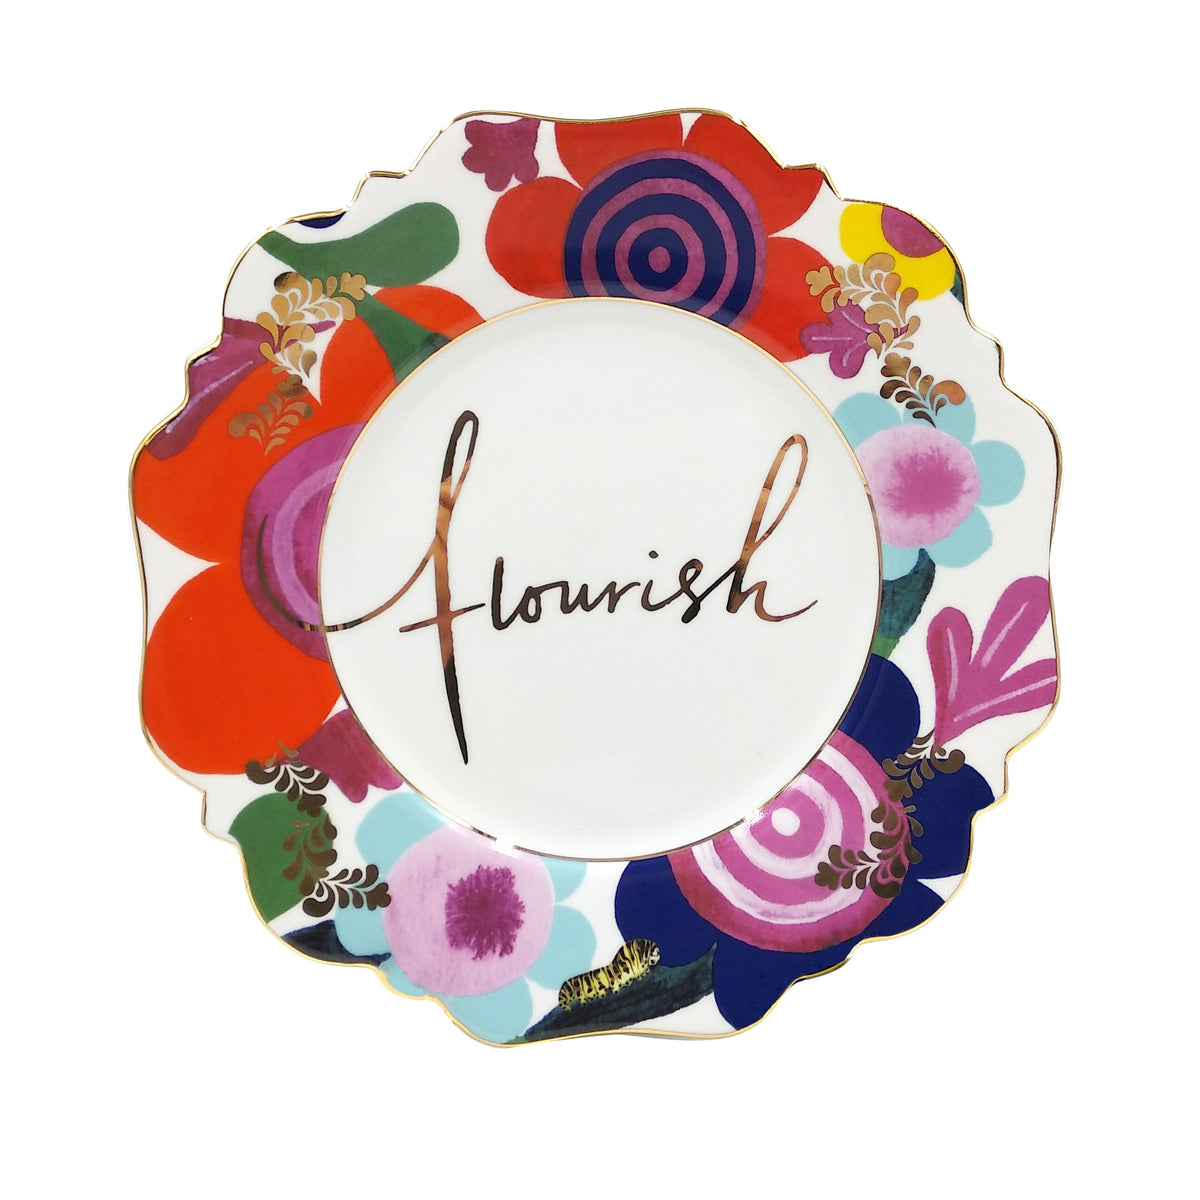 ‘Flourish’ Side Plate